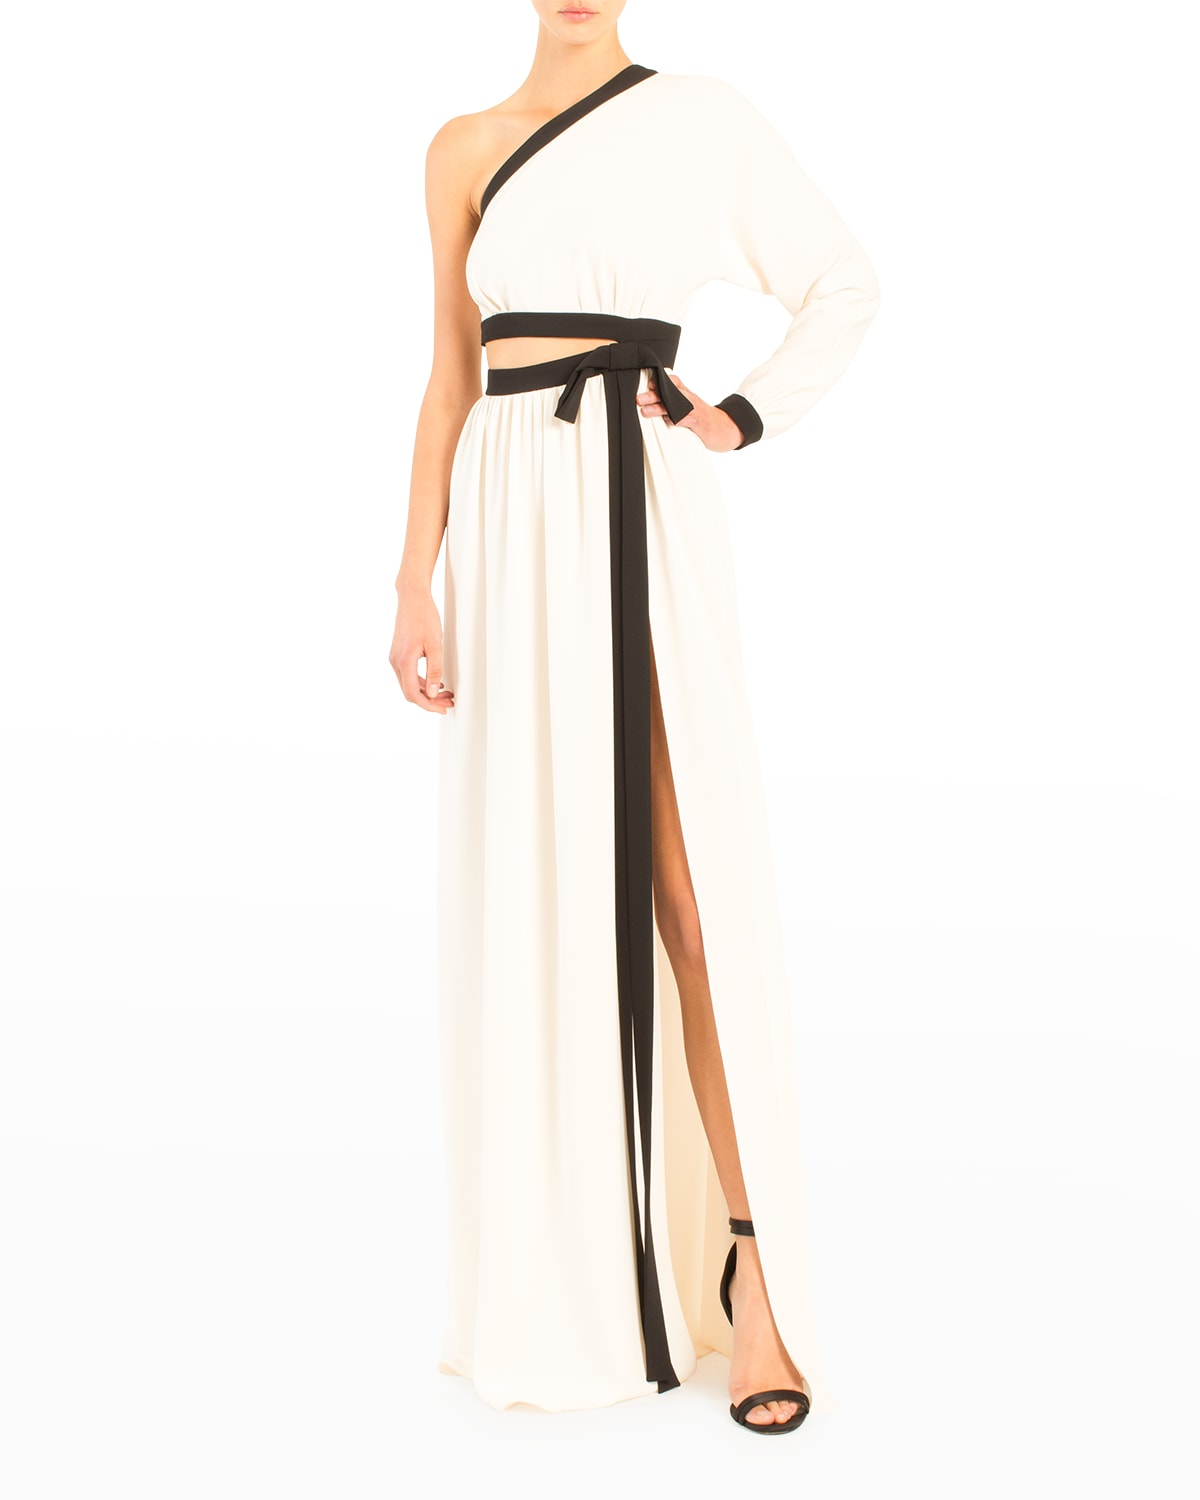 Black White Gown | Neiman Marcus